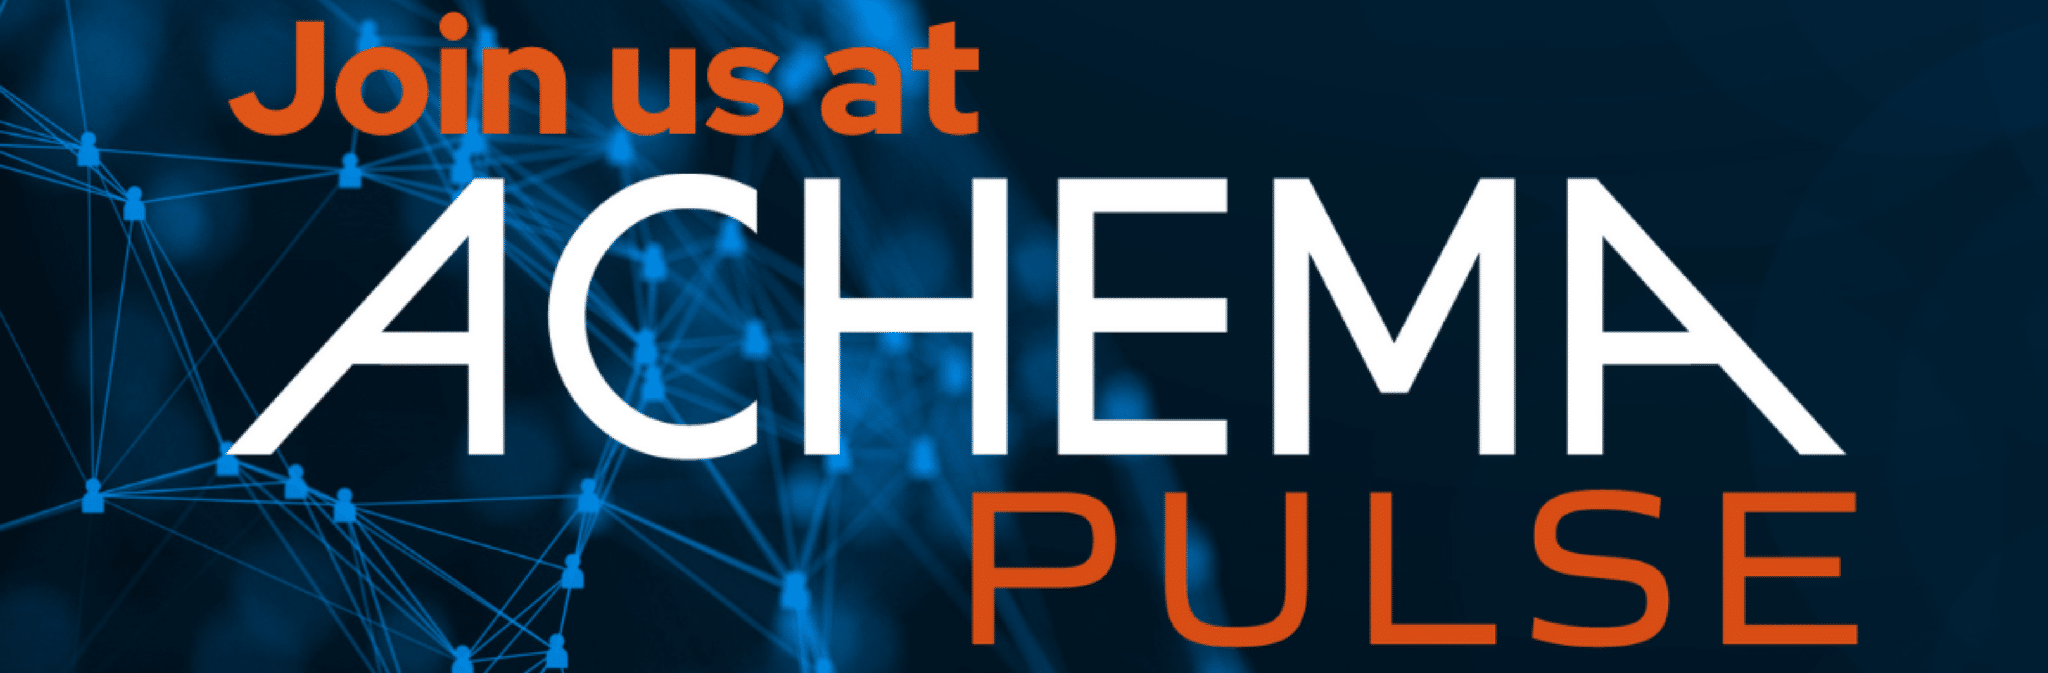 Join us at ACHEMA PULSE 2021